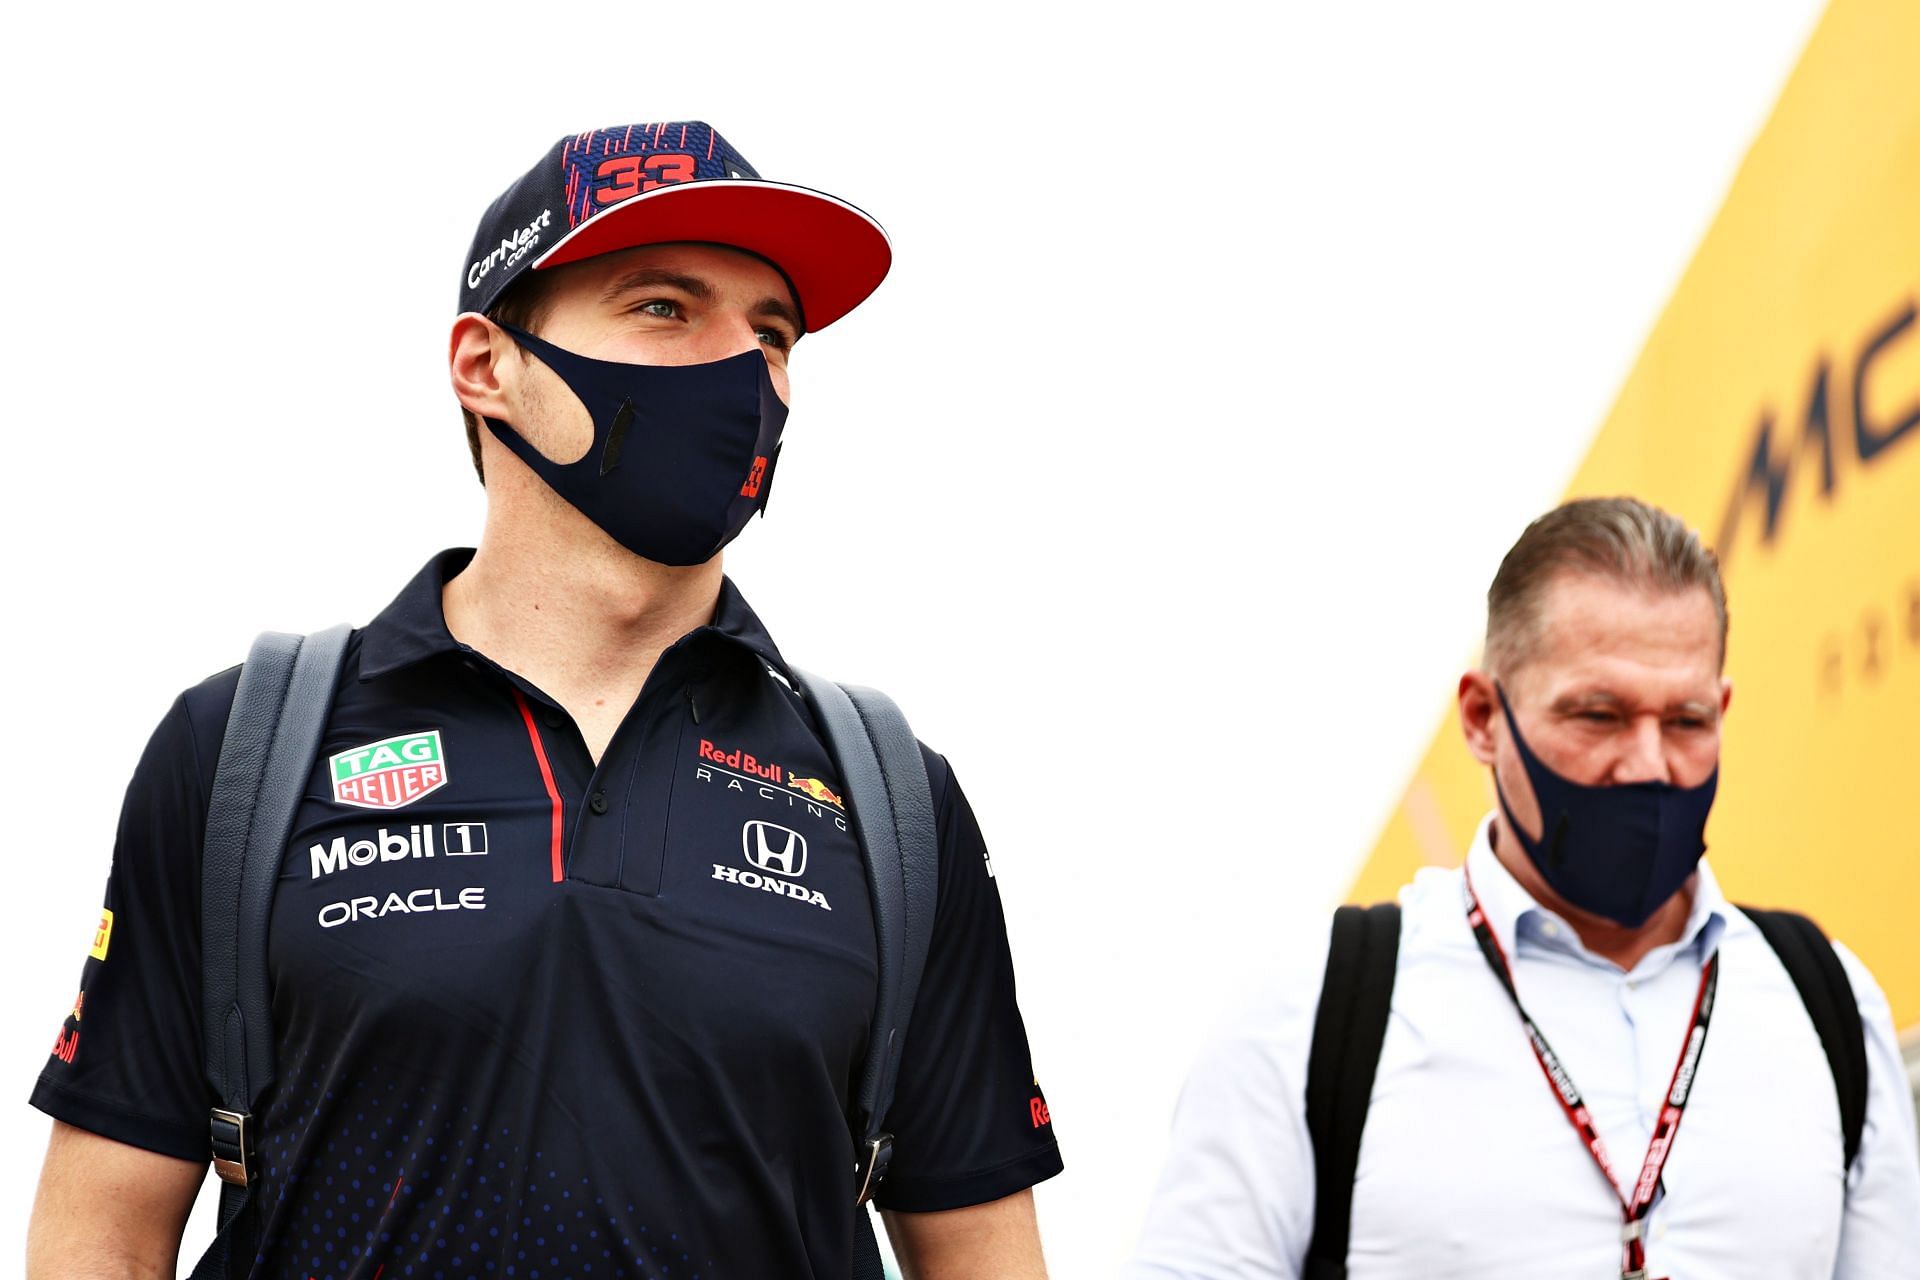 F1 Grand Prix of Qatar - Jos and Max Verstappen